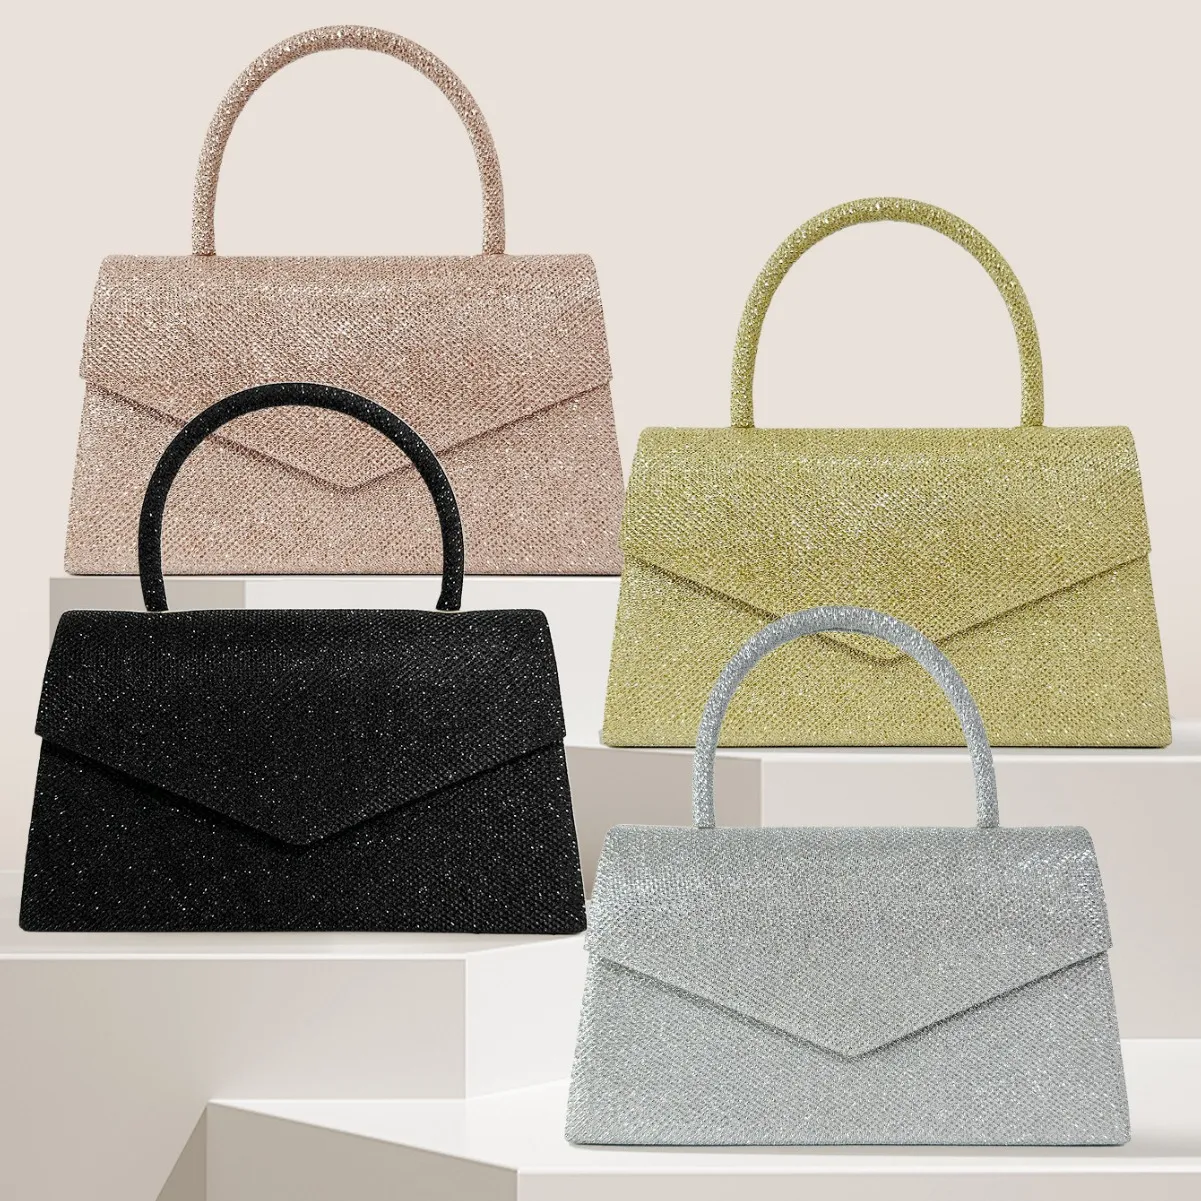 Source Manufacturer's New Ready-made Cross-border E-commerce Women's Handbag, Colorful Glitter Fashion Evening Bag